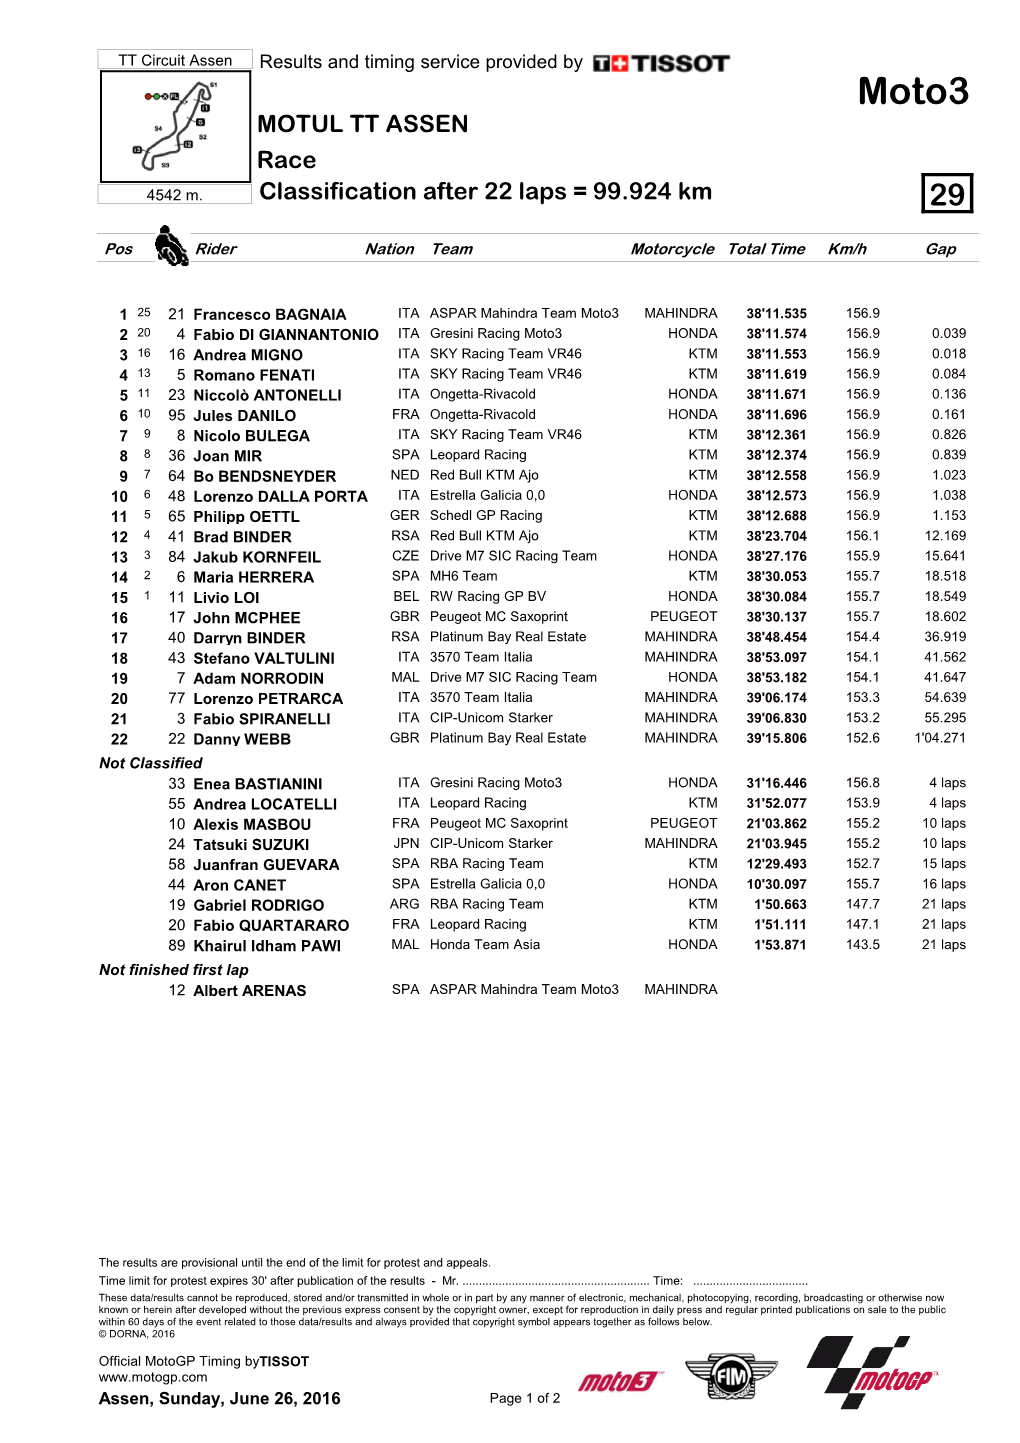 Moto3 MOTUL TT ASSEN Race 4542 M